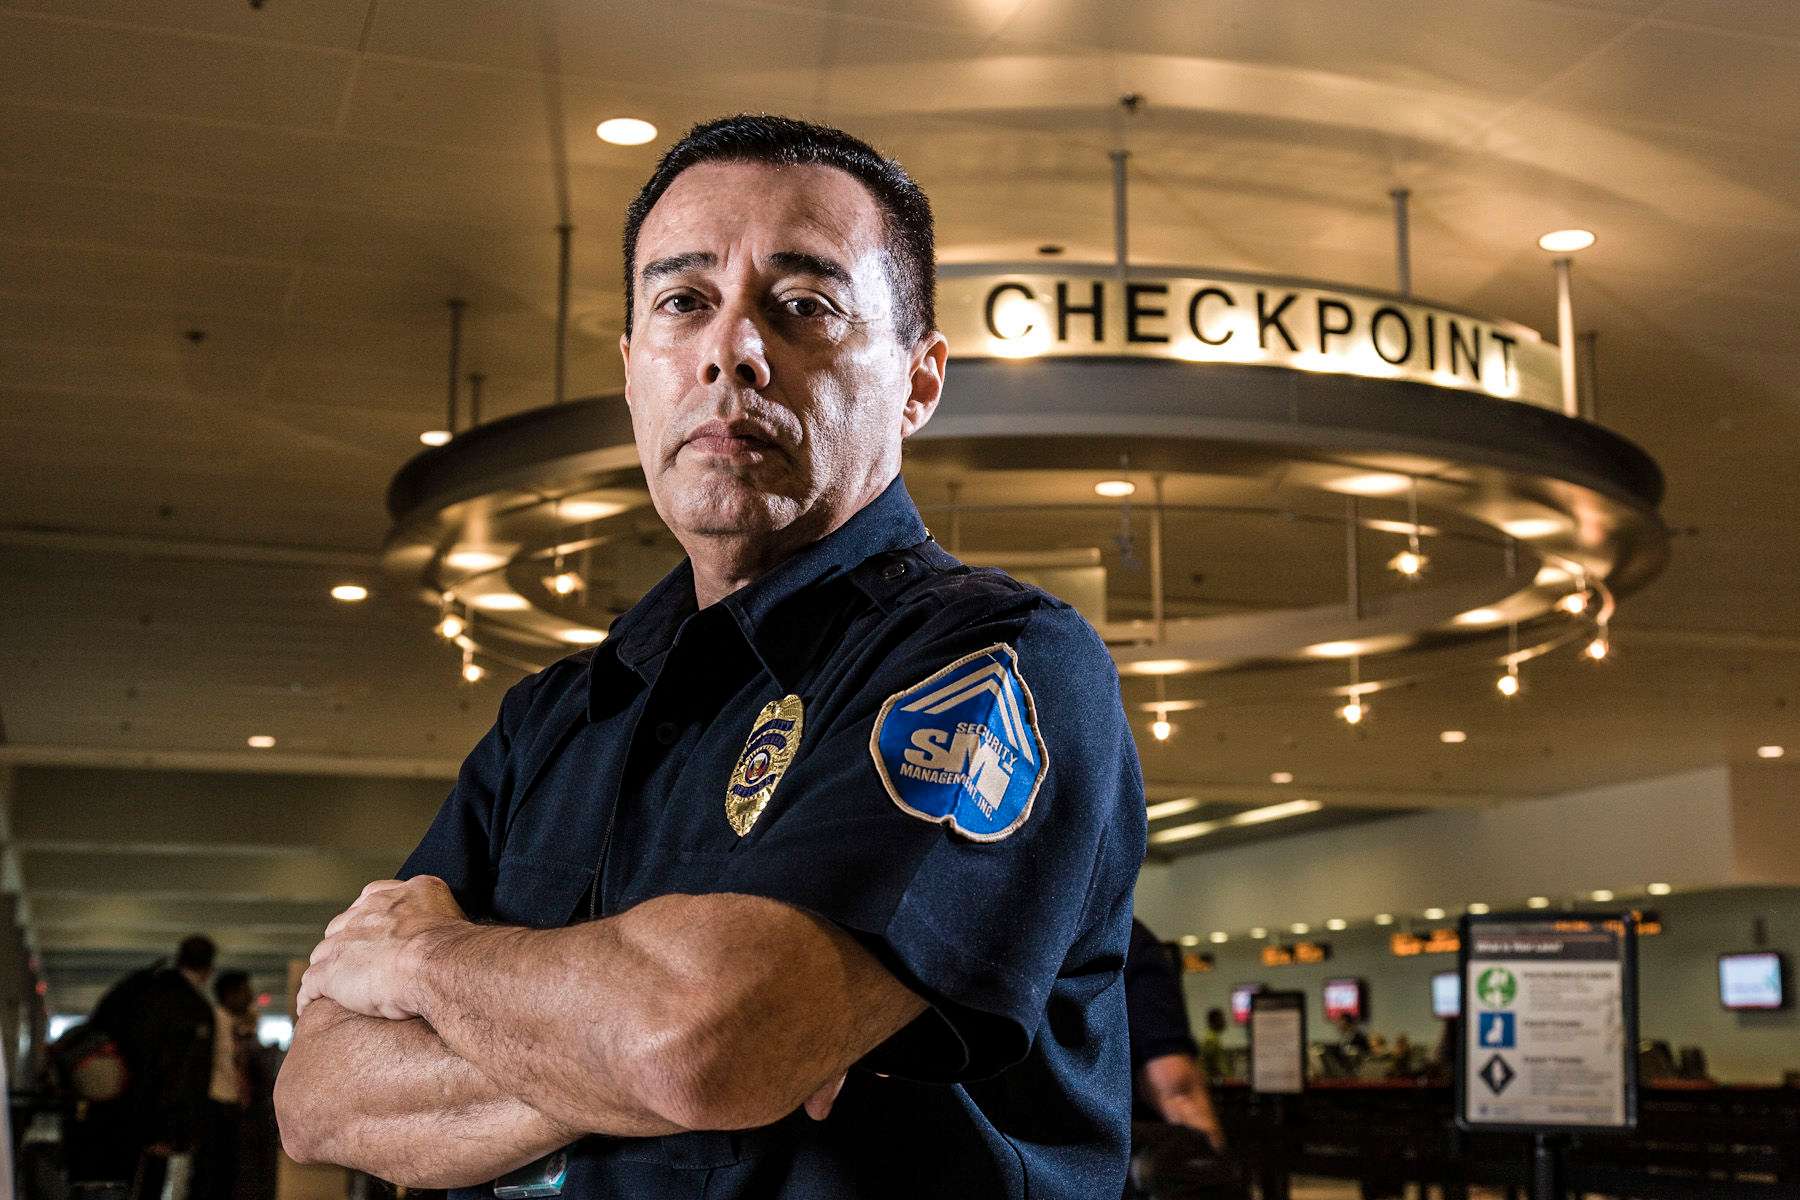 Security guard at Miami Airport